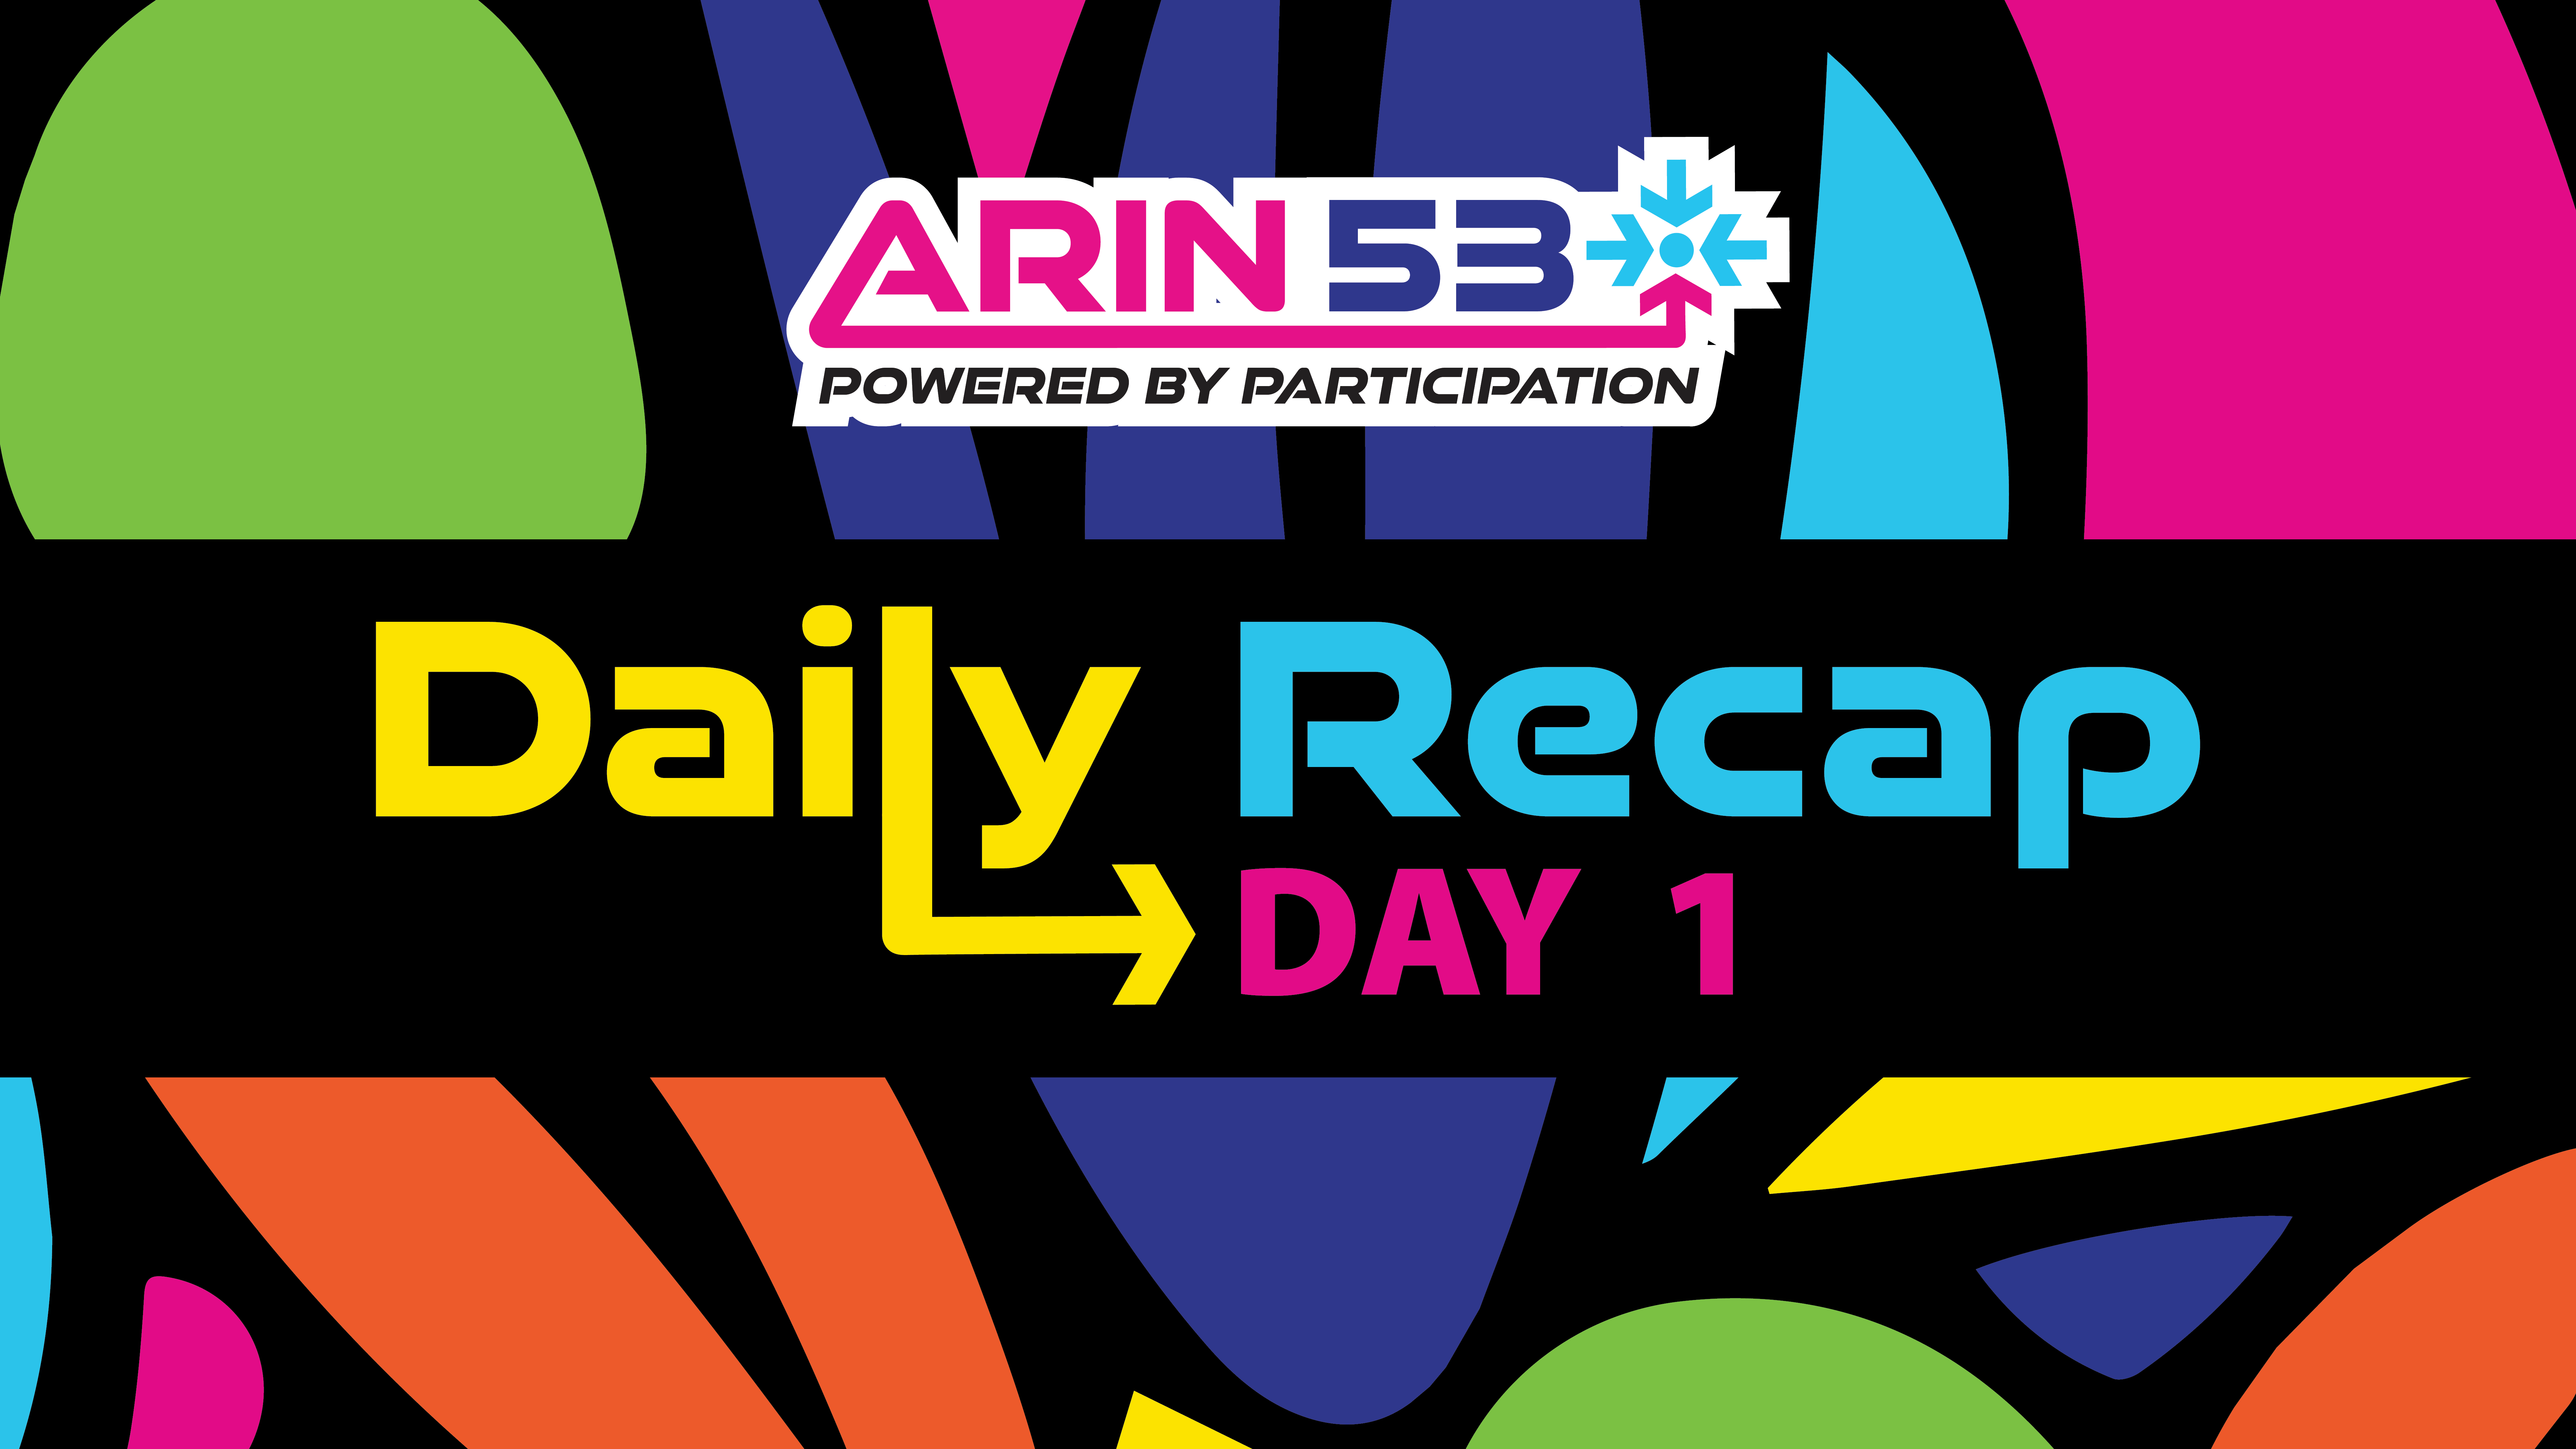 ARIN 53 Day 1 Recap